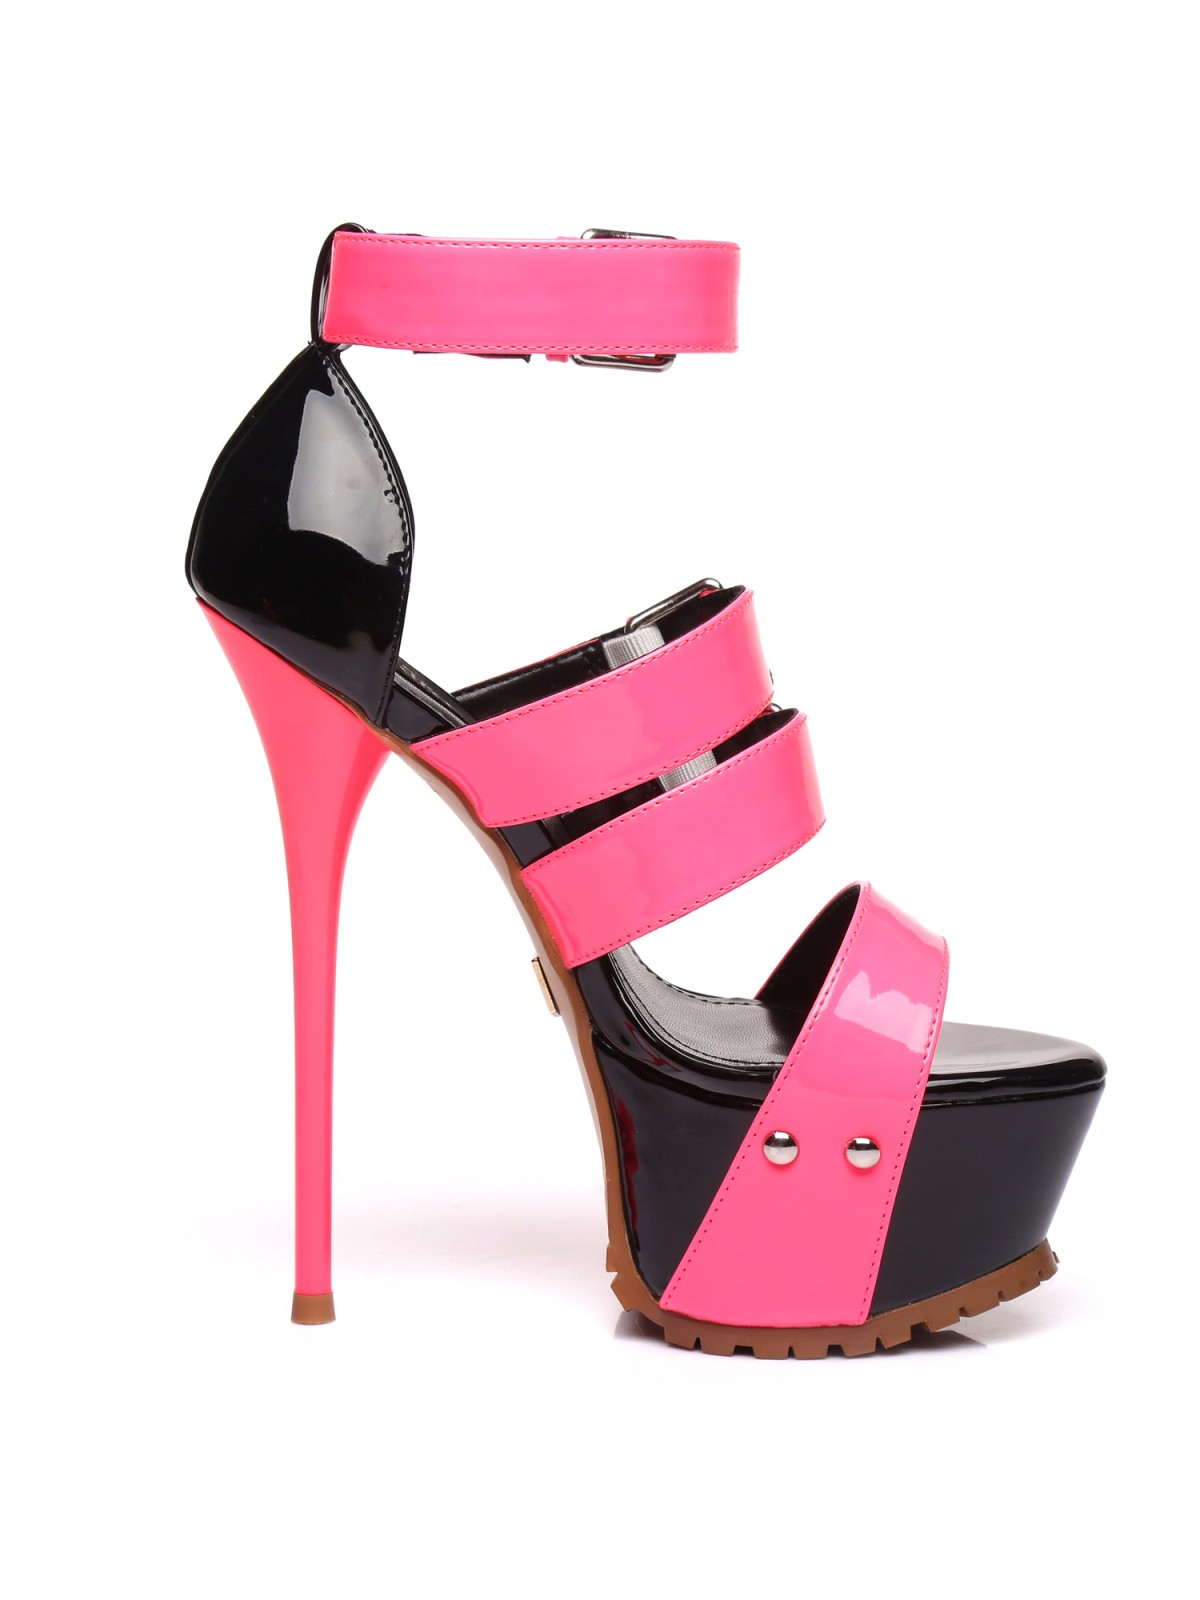 Giaro SIENNA black with pink straps shiny platform sandals